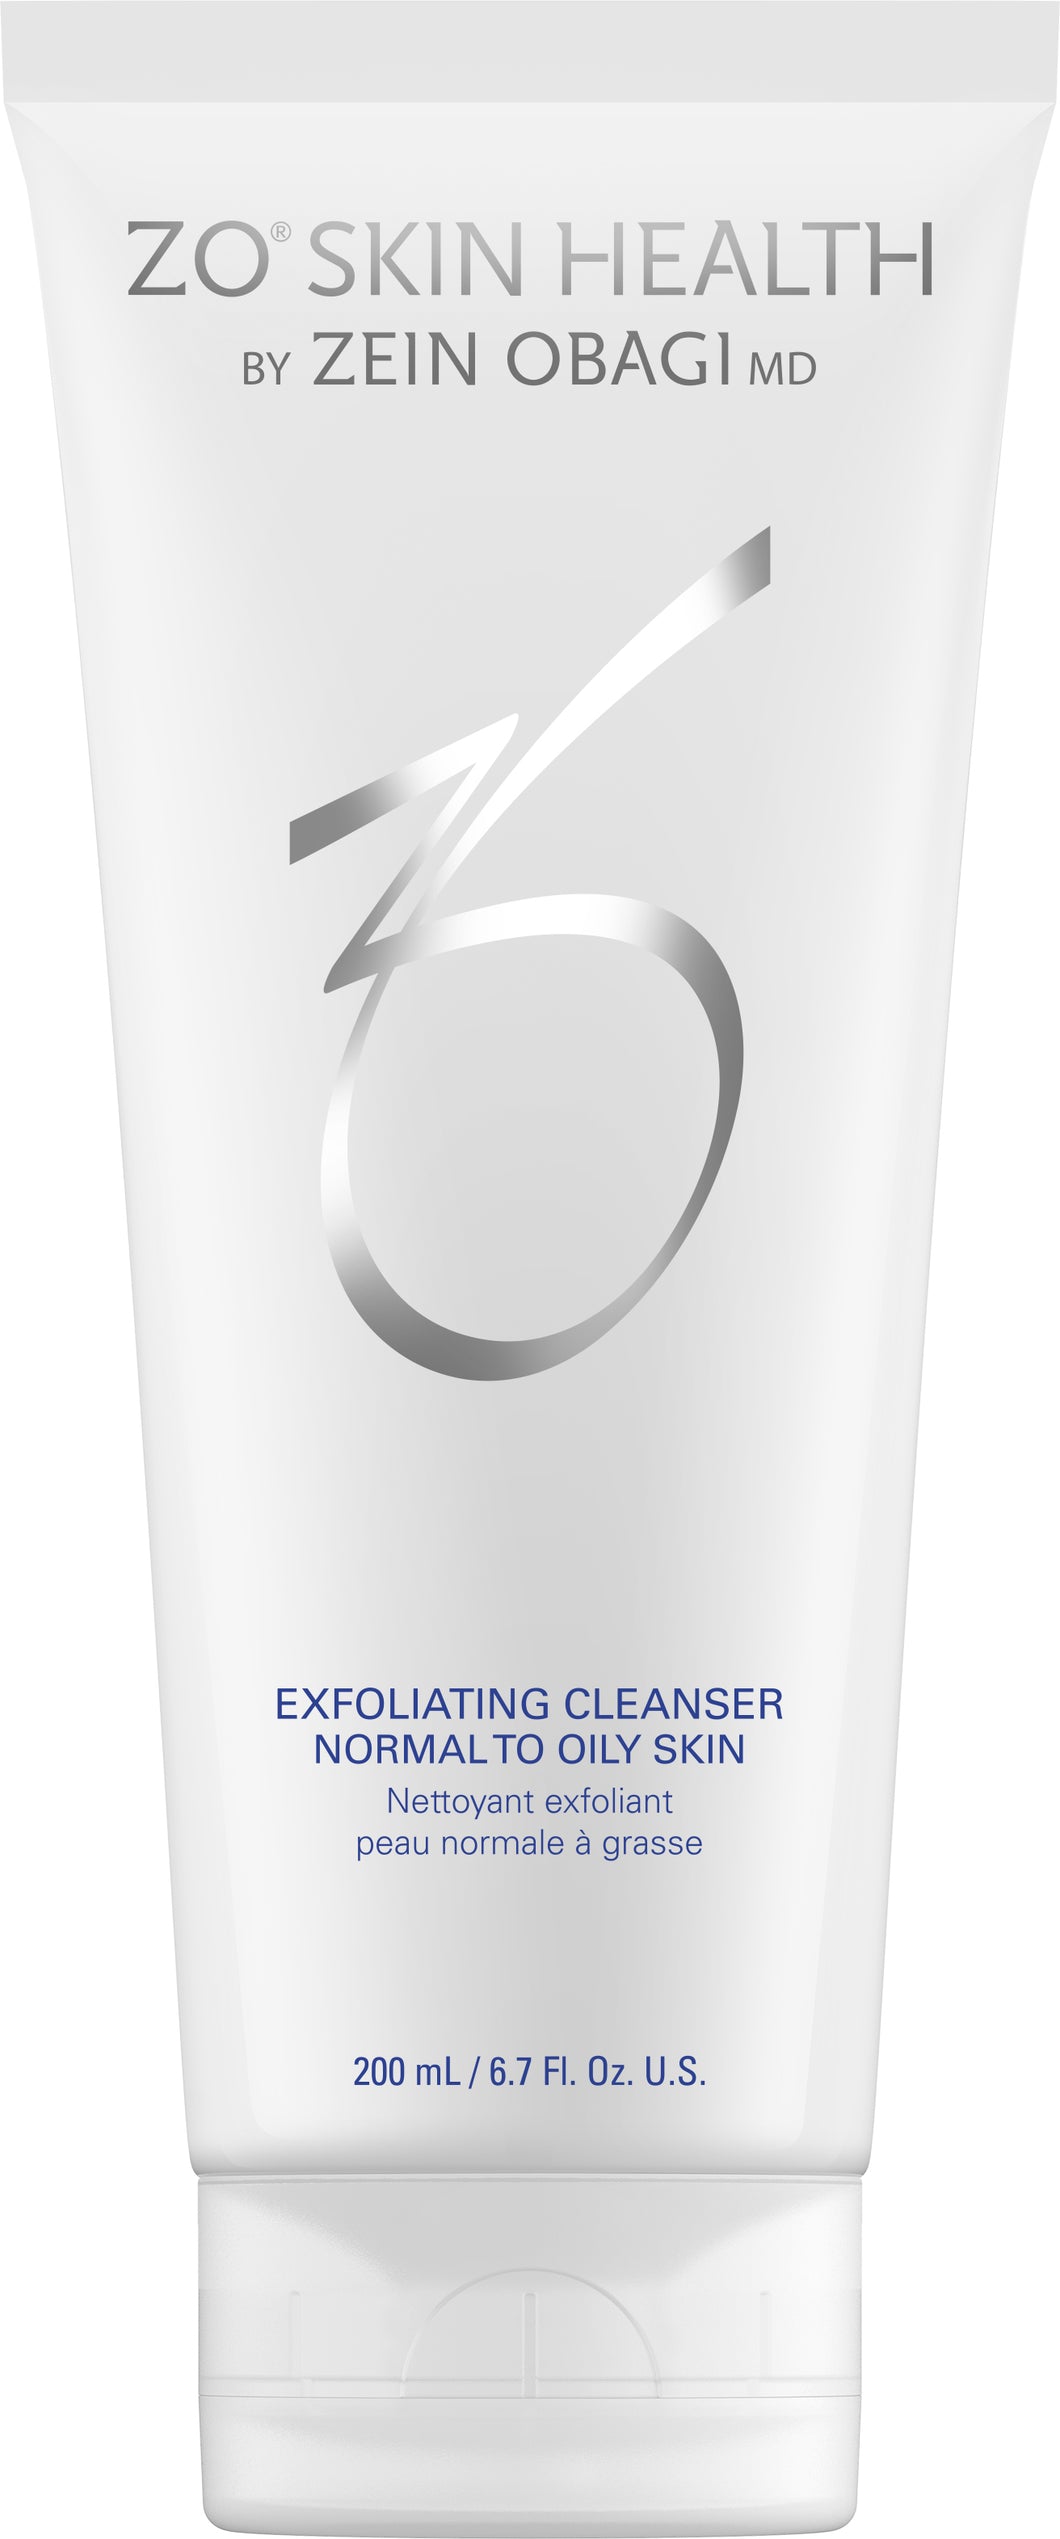 ZO SKIN HEALTH Exfoliating Cleanser Normal to Oily Skin 200ml - $100